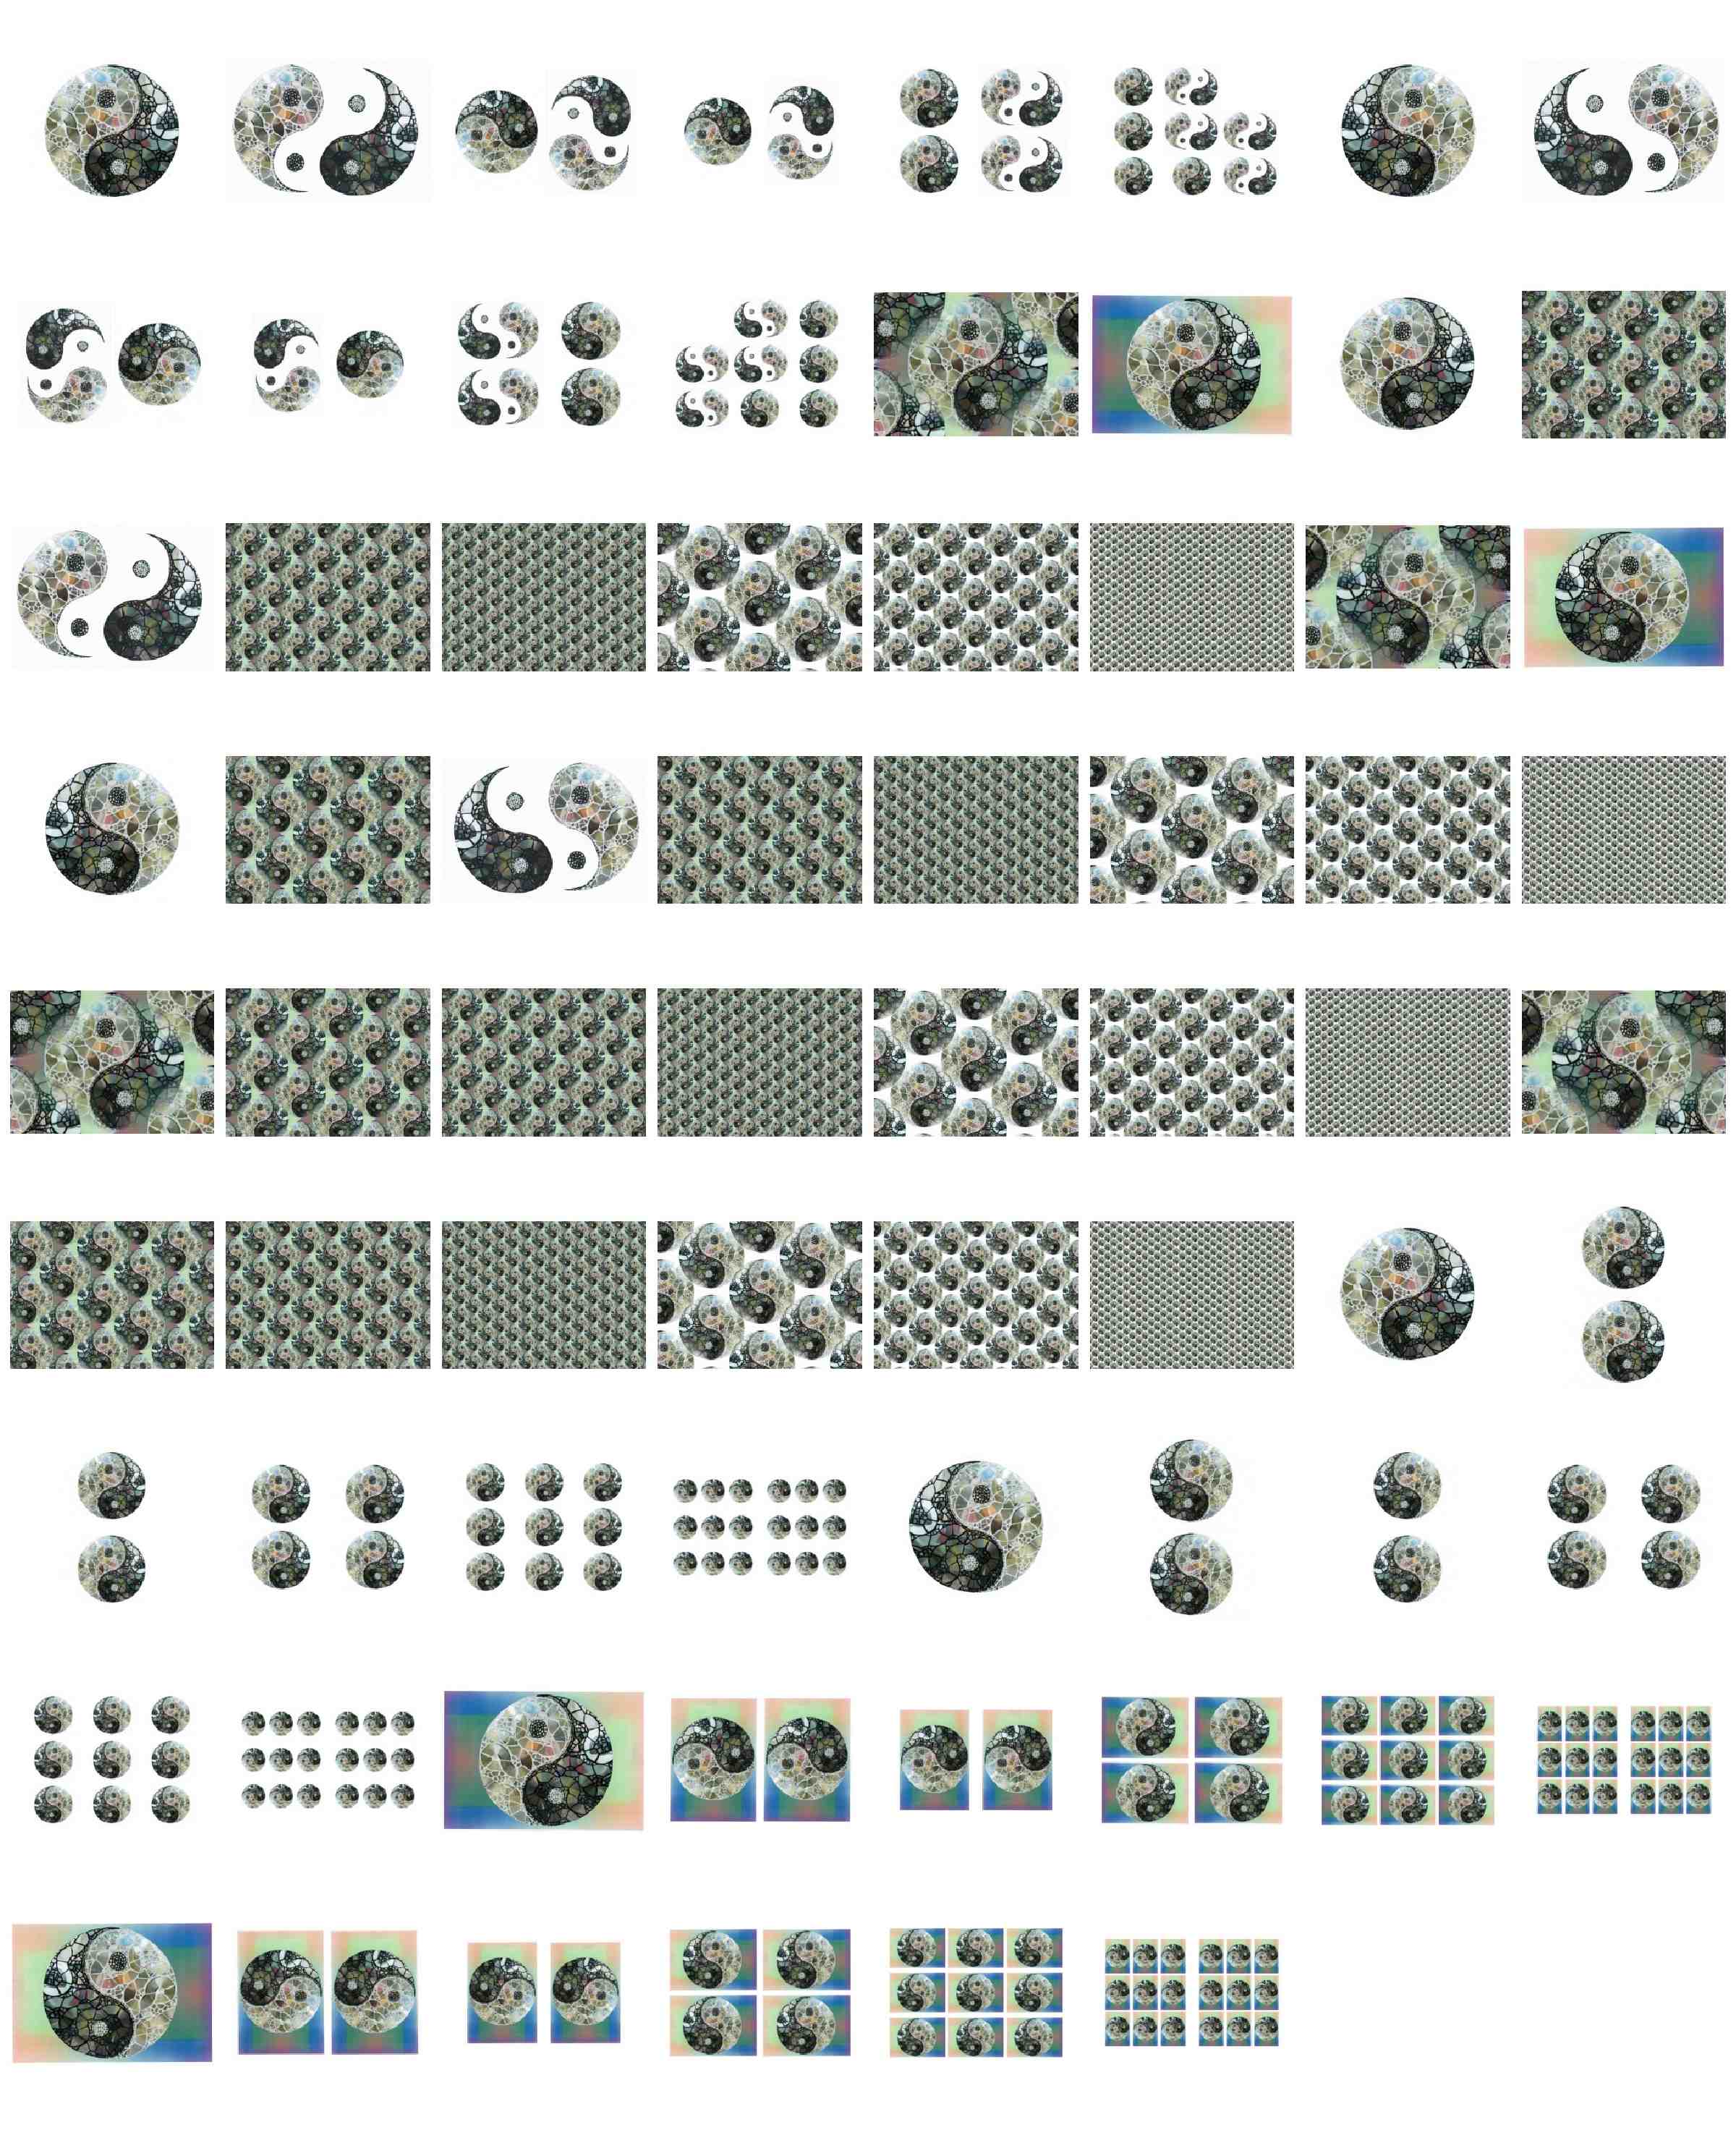 Mosaic Yin Yang Set - 70 Pages to Download